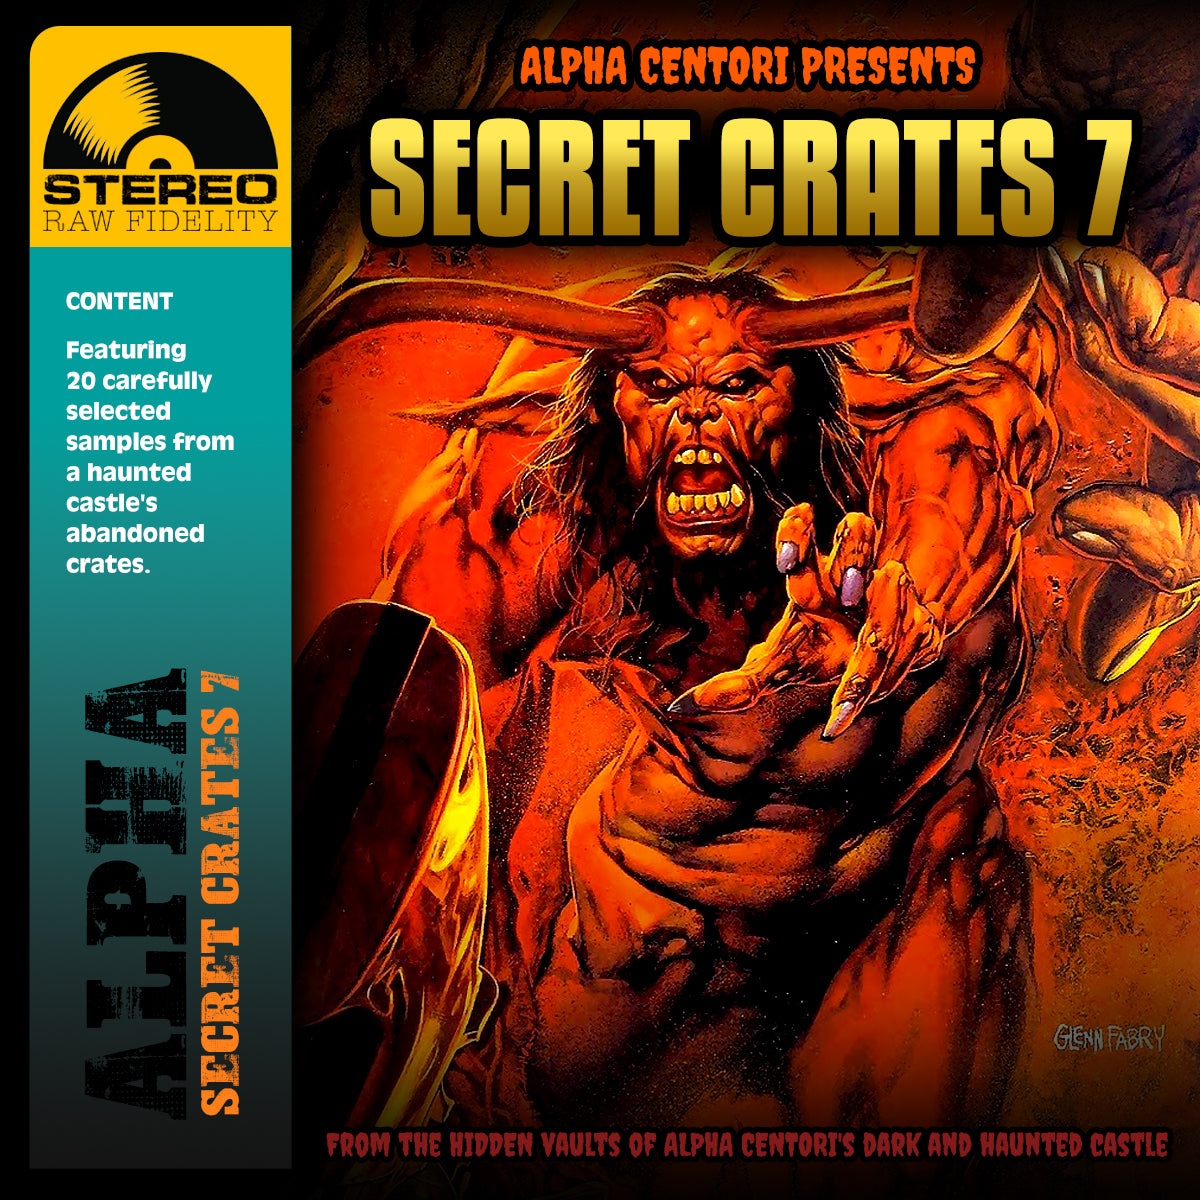 Secret Crates 7